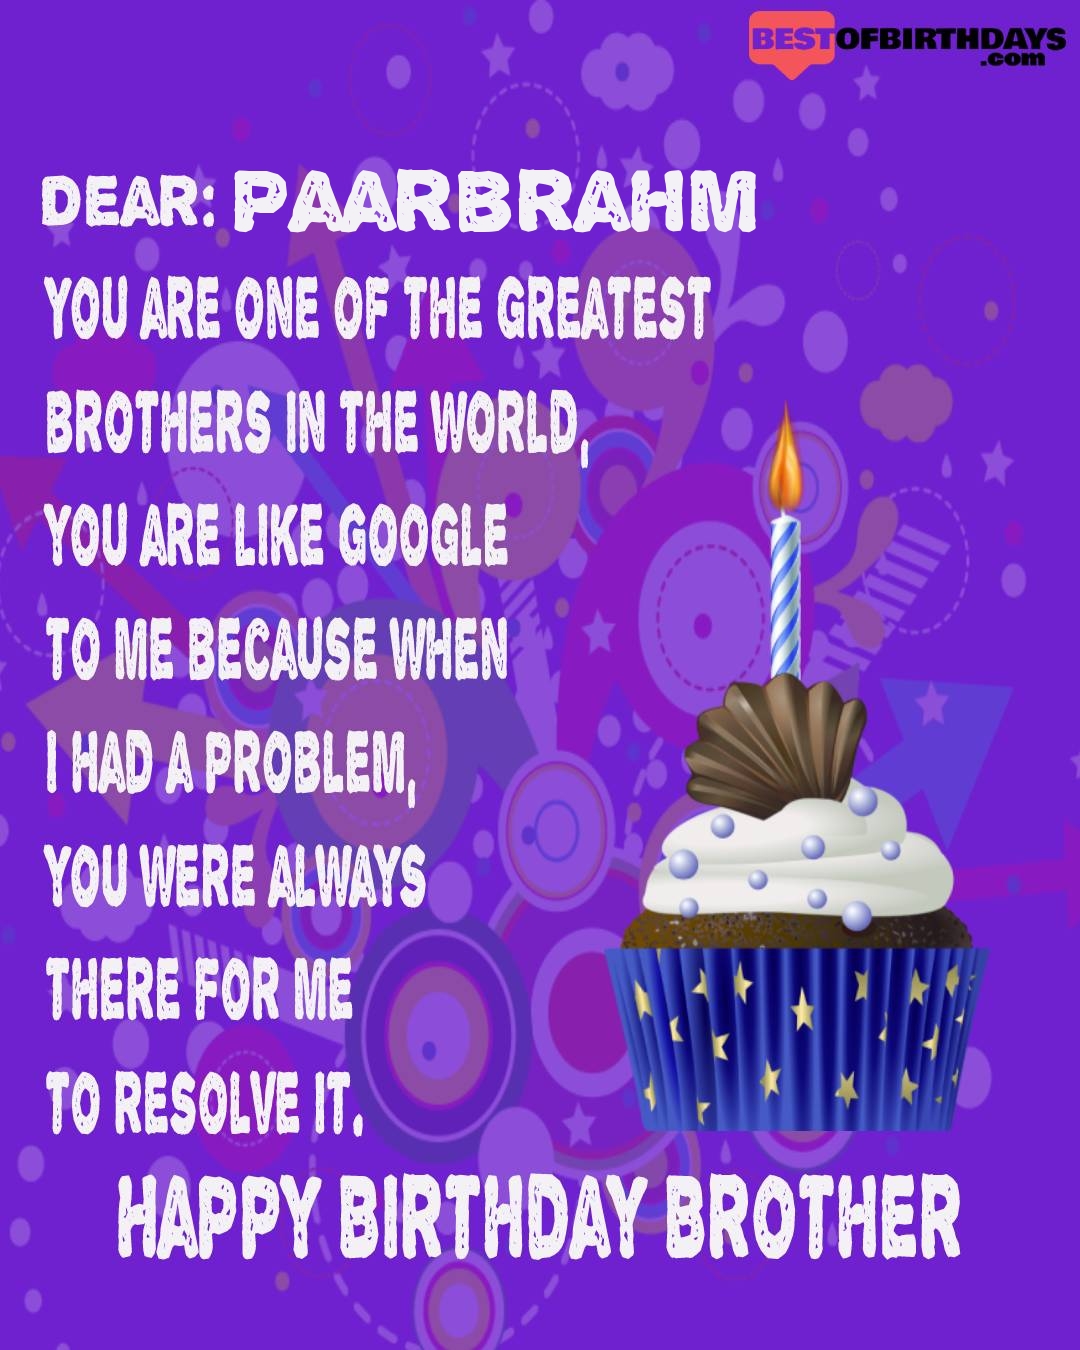 Happy birthday paarbrahm bhai brother bro